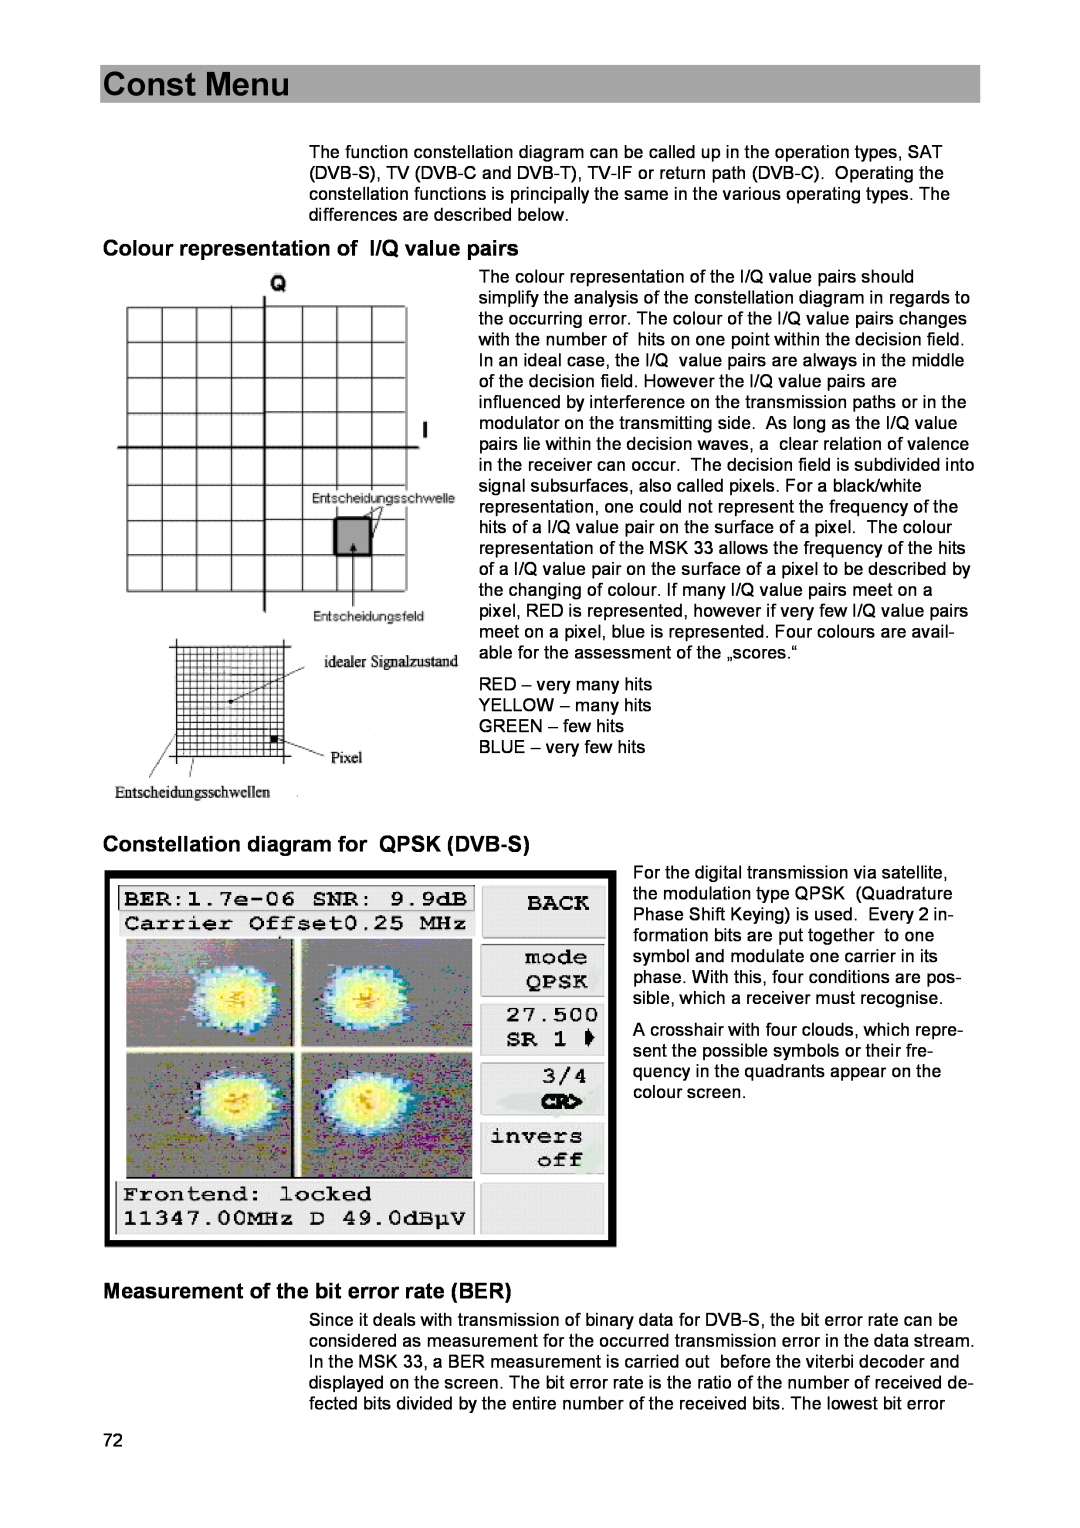 DreamGEAR MSK 33 manual Const Menu, Colour representation of I/Q value pairs, Constellation diagram for QPSK DVB-S 